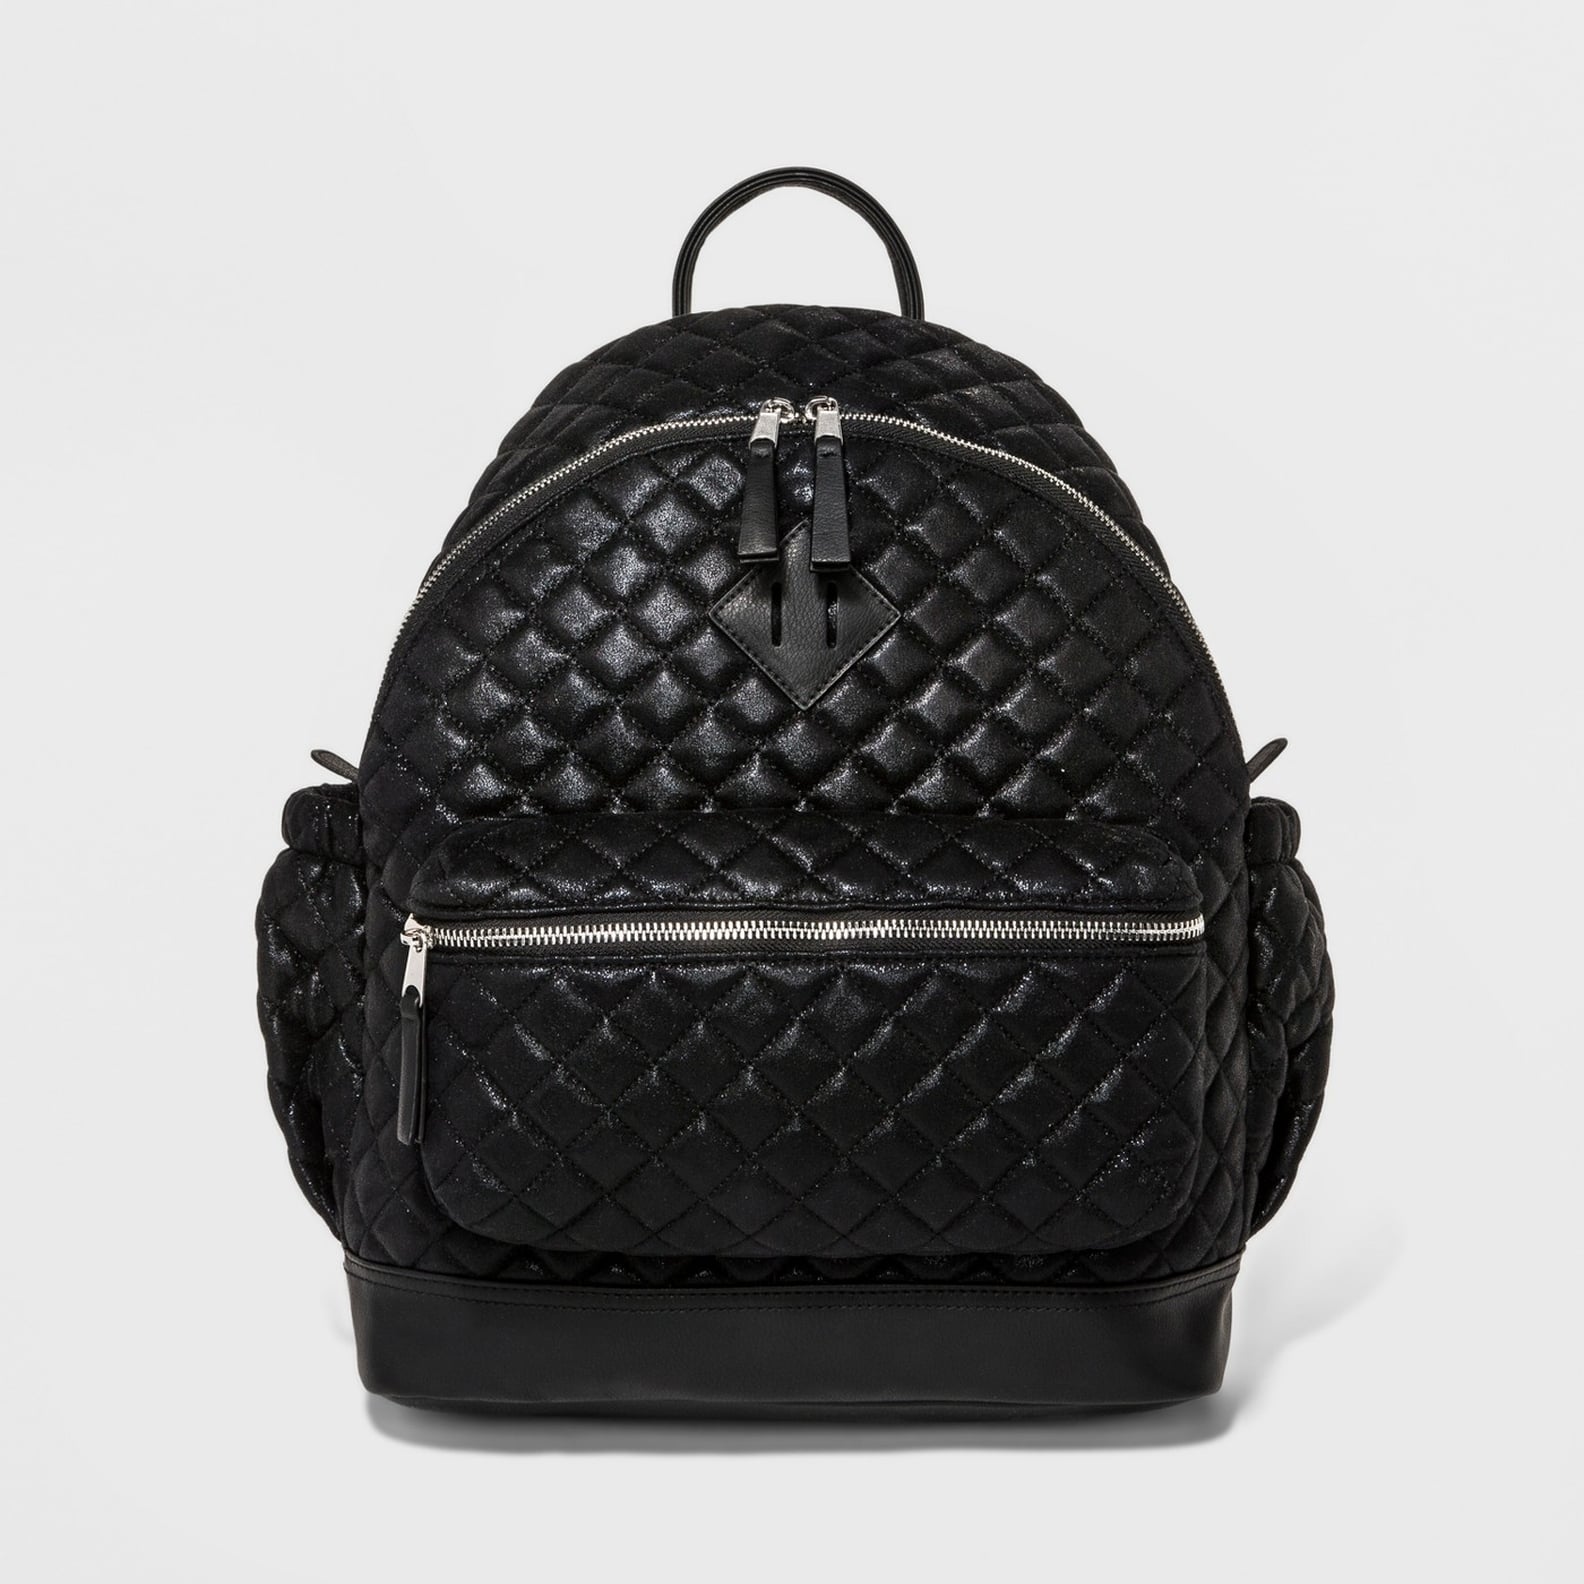 Kylie Jenner Wearing a Chanel Backpack | POPSUGAR Fashion